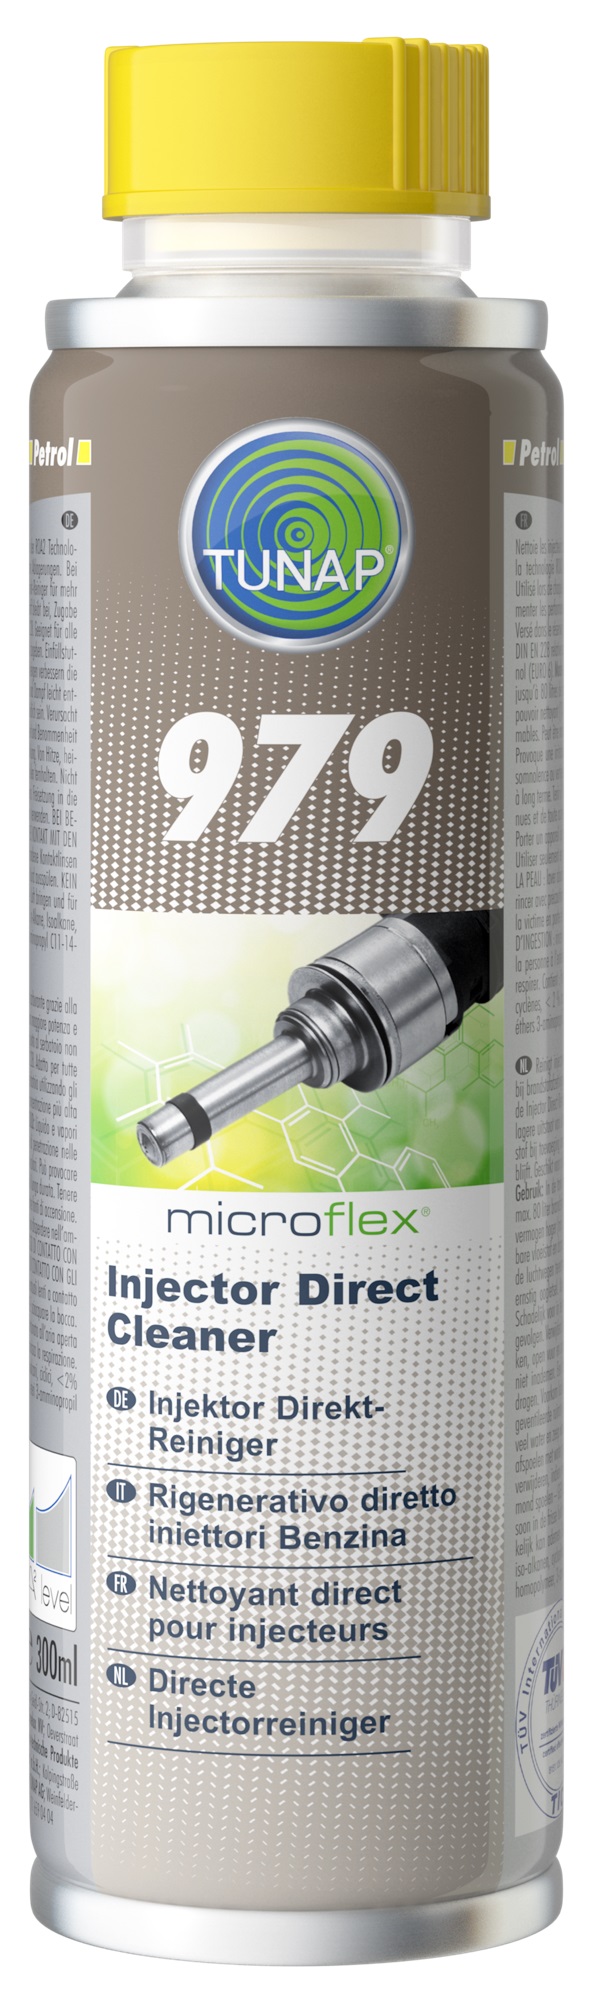 979 Injektor Direkt-Reiniger 300ml